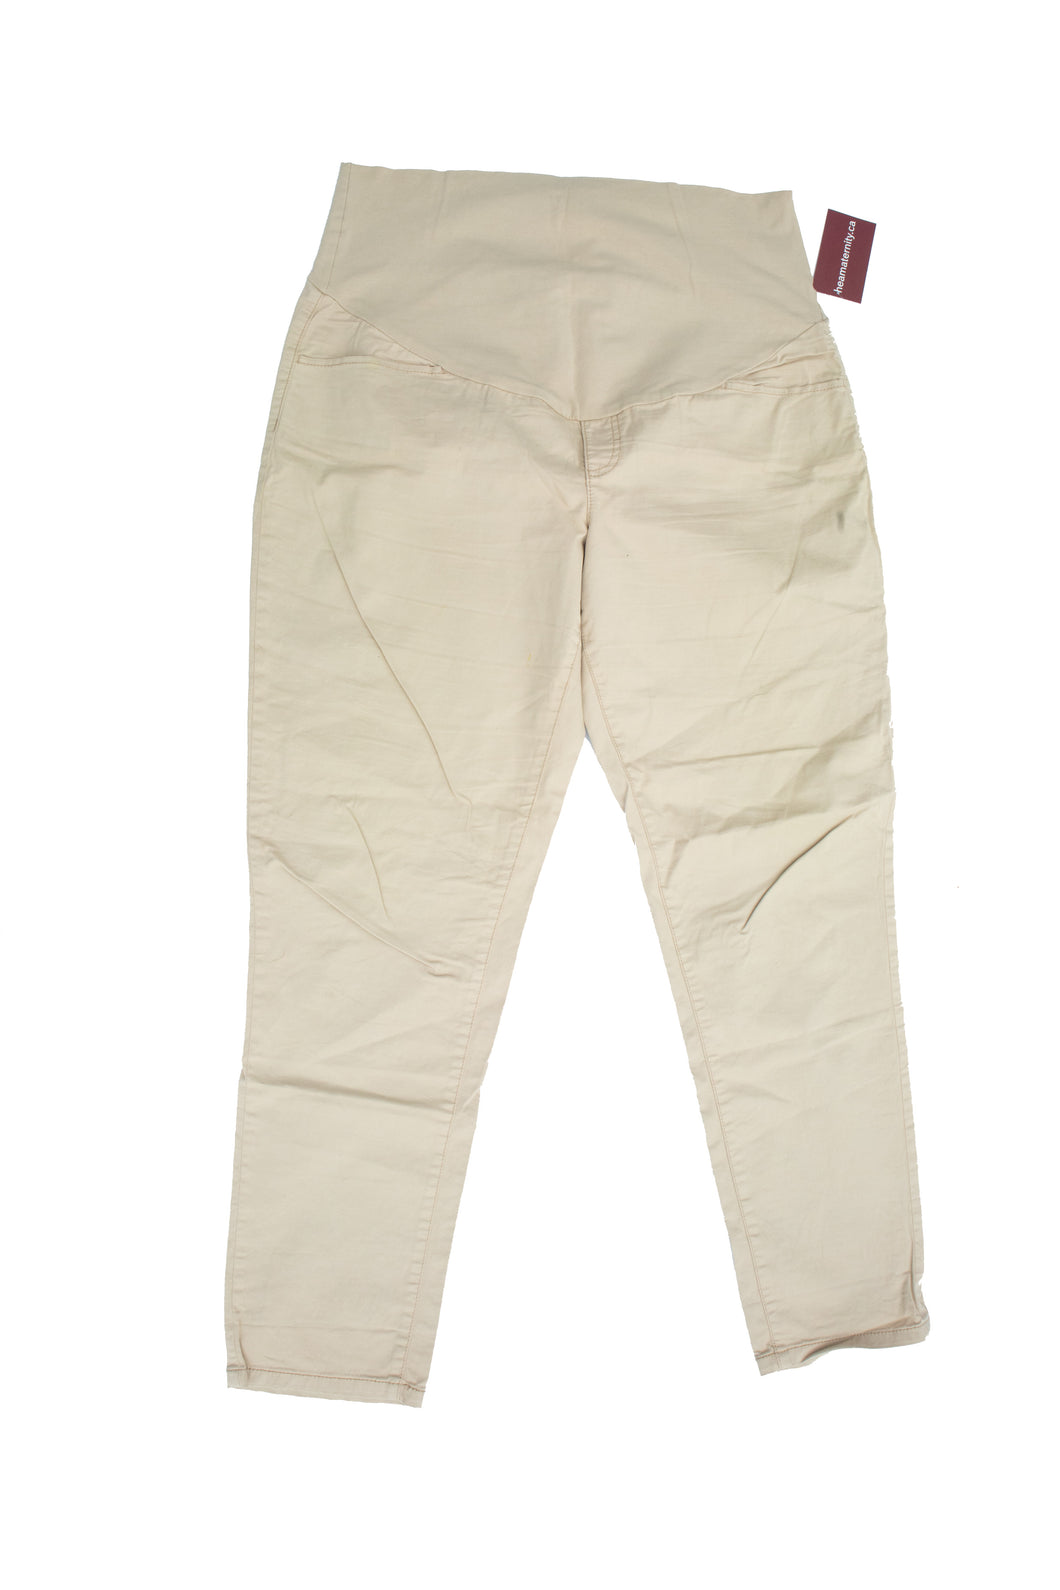 XL Thyme Maternity Cotton Pant 32